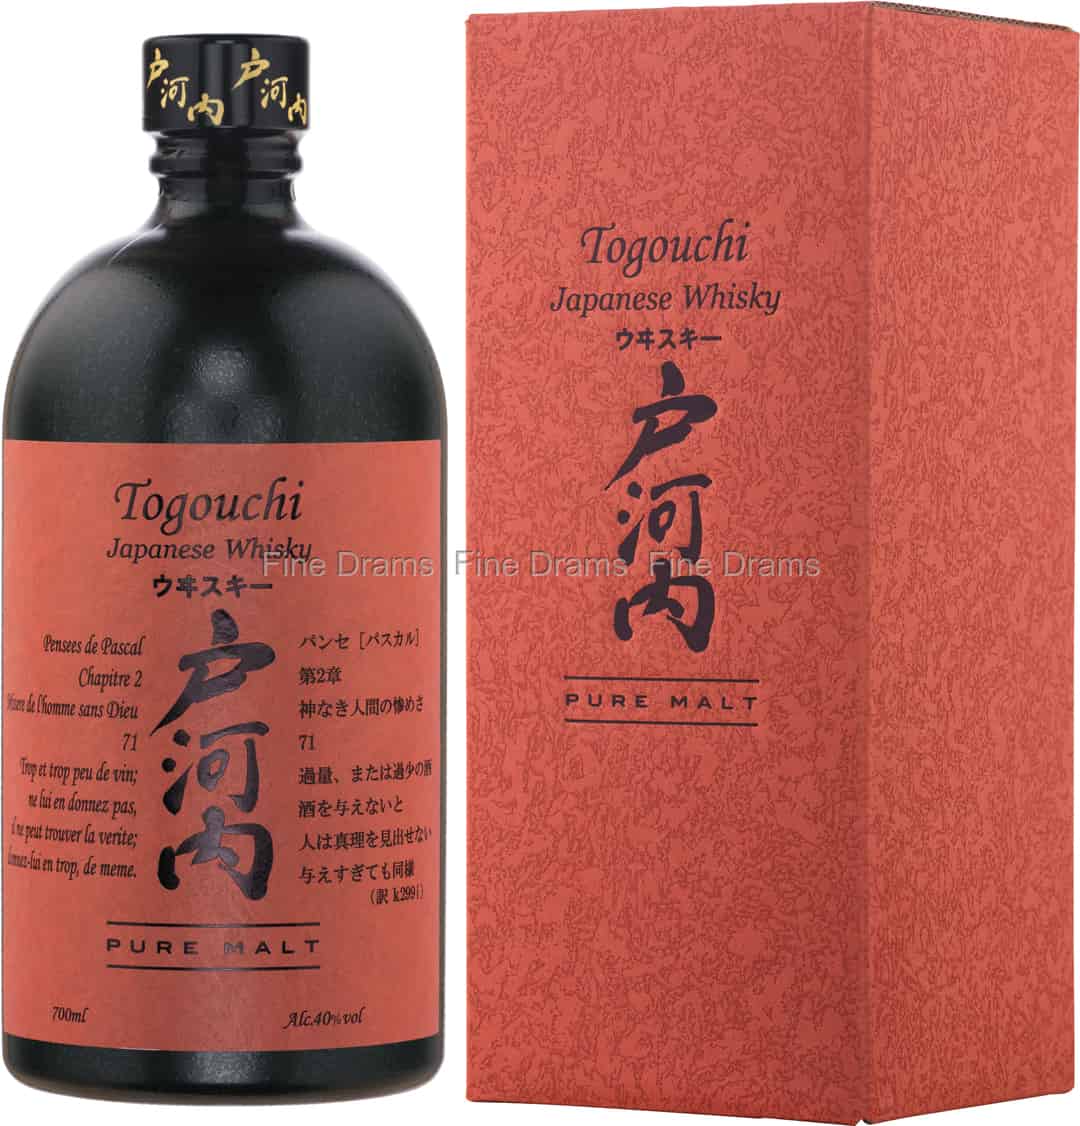 Togouchi Kiwami Blended Whisky